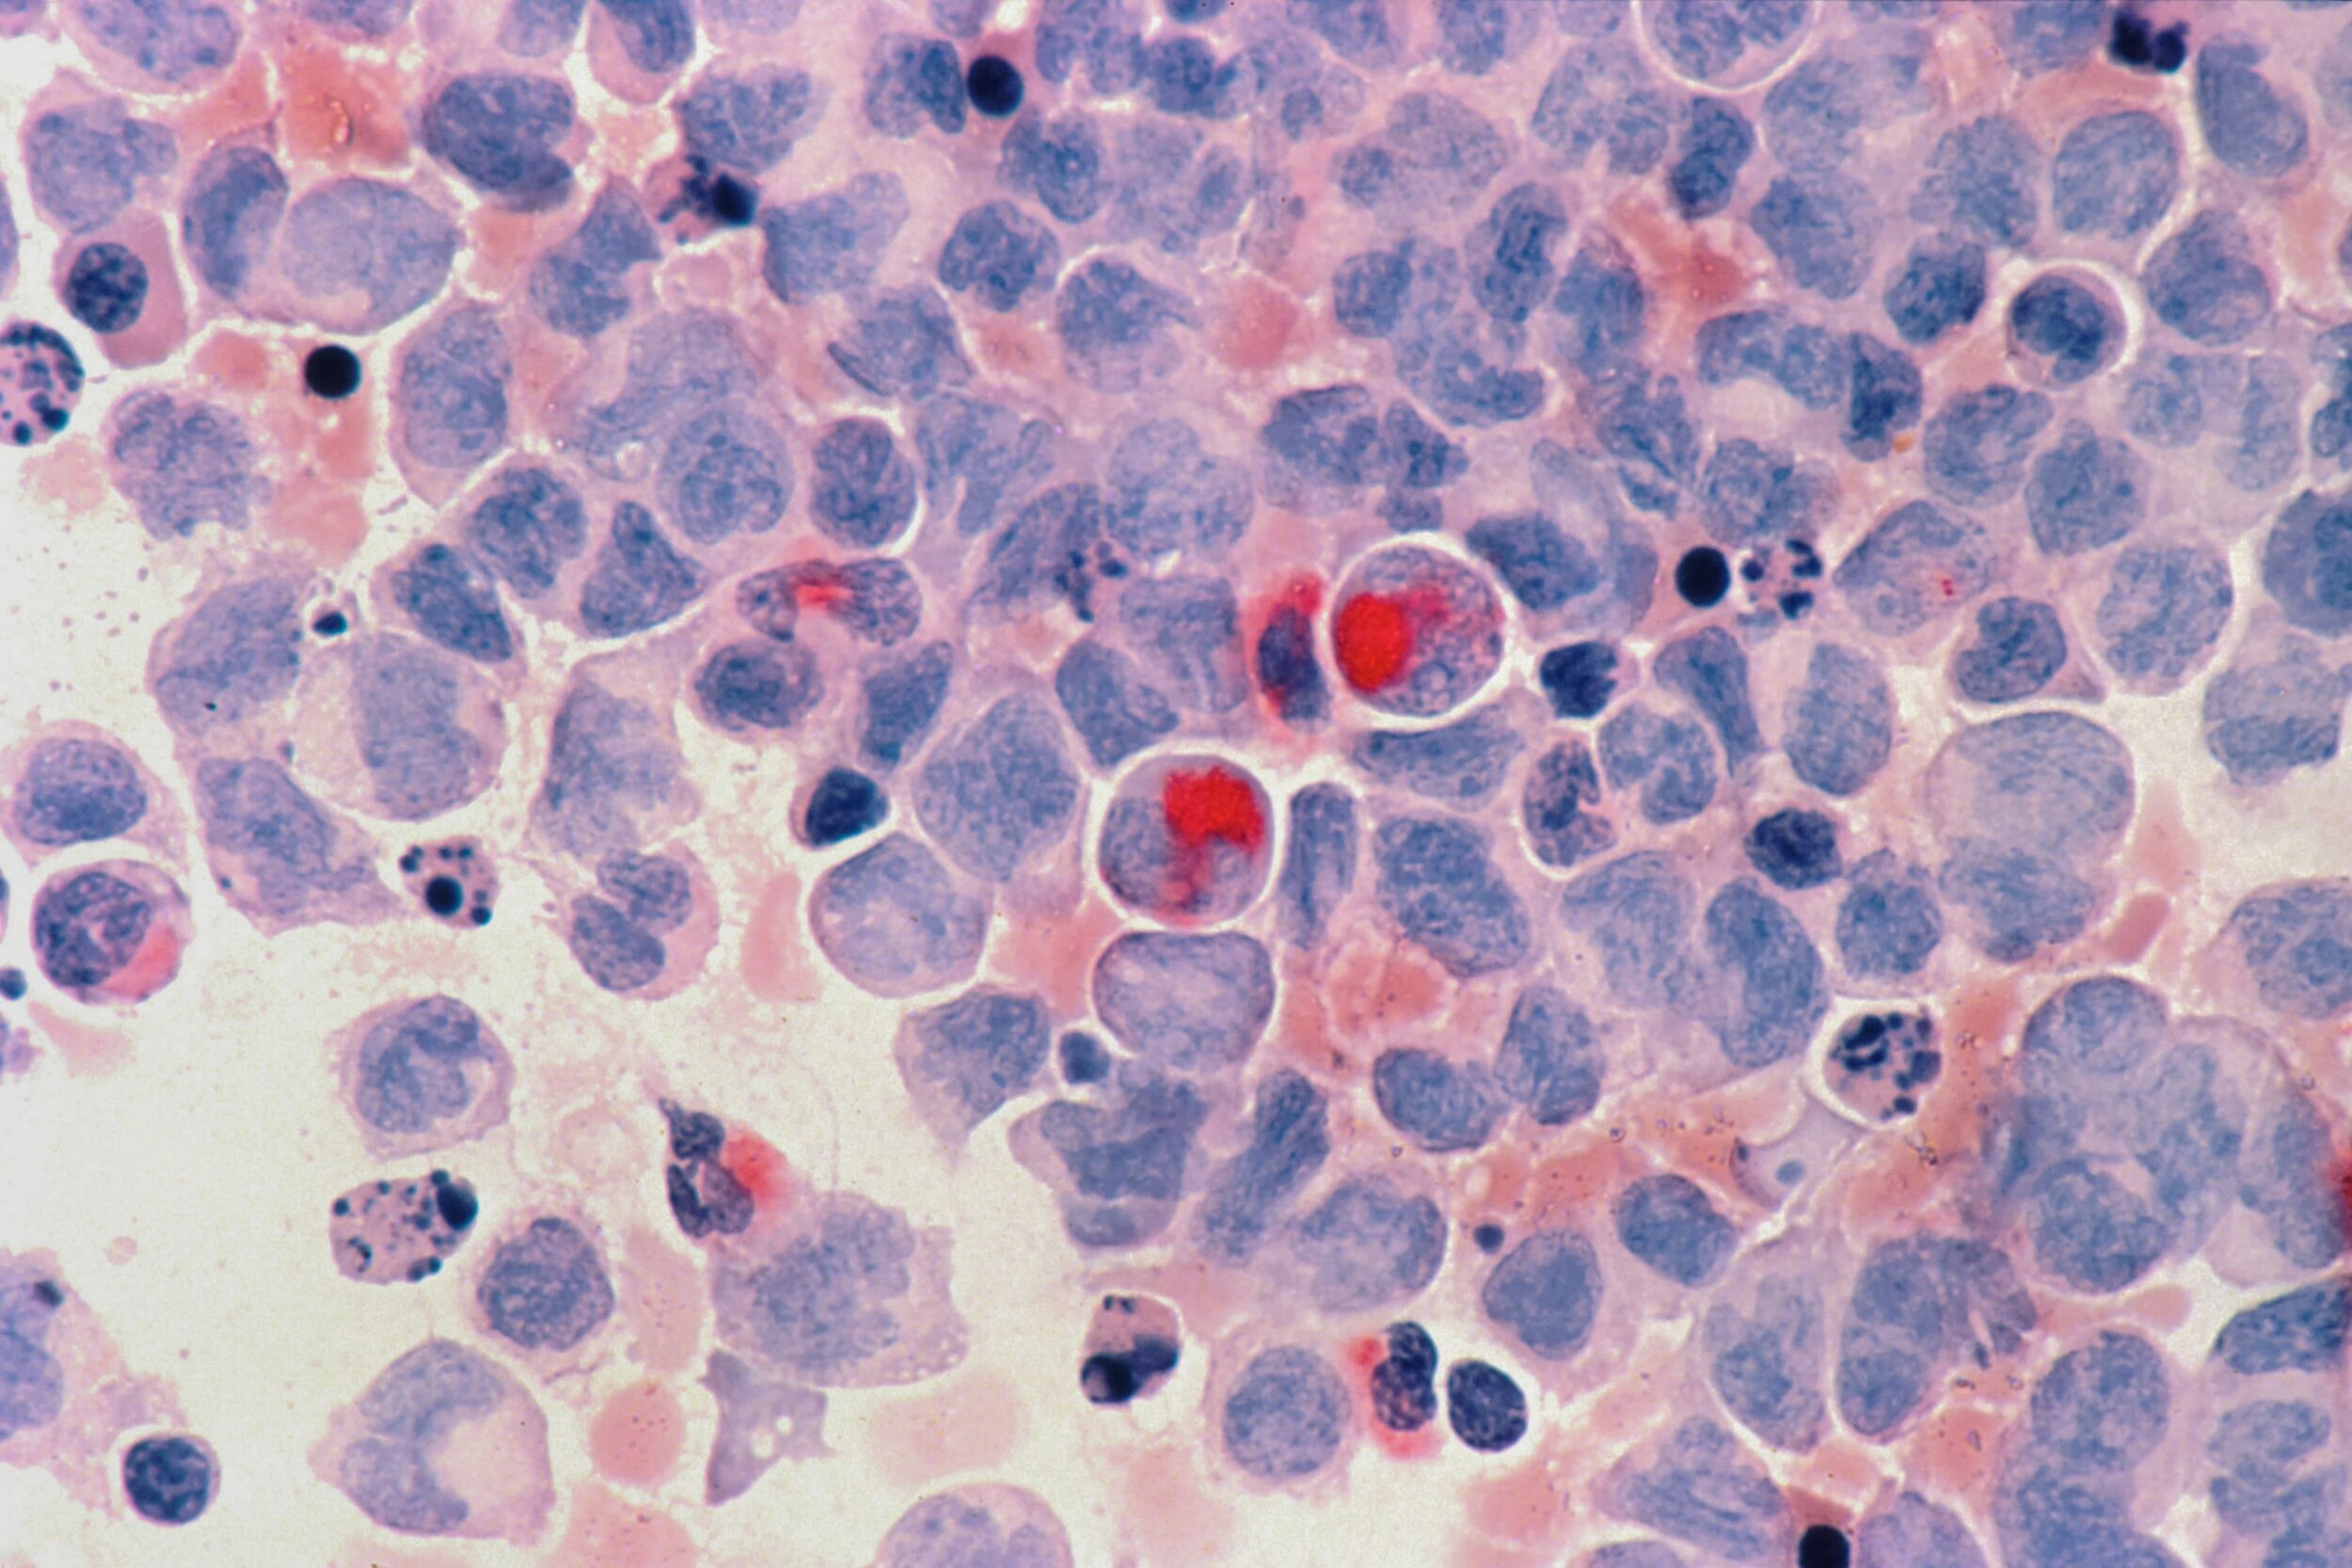 Acute myeloid leukaemia cells